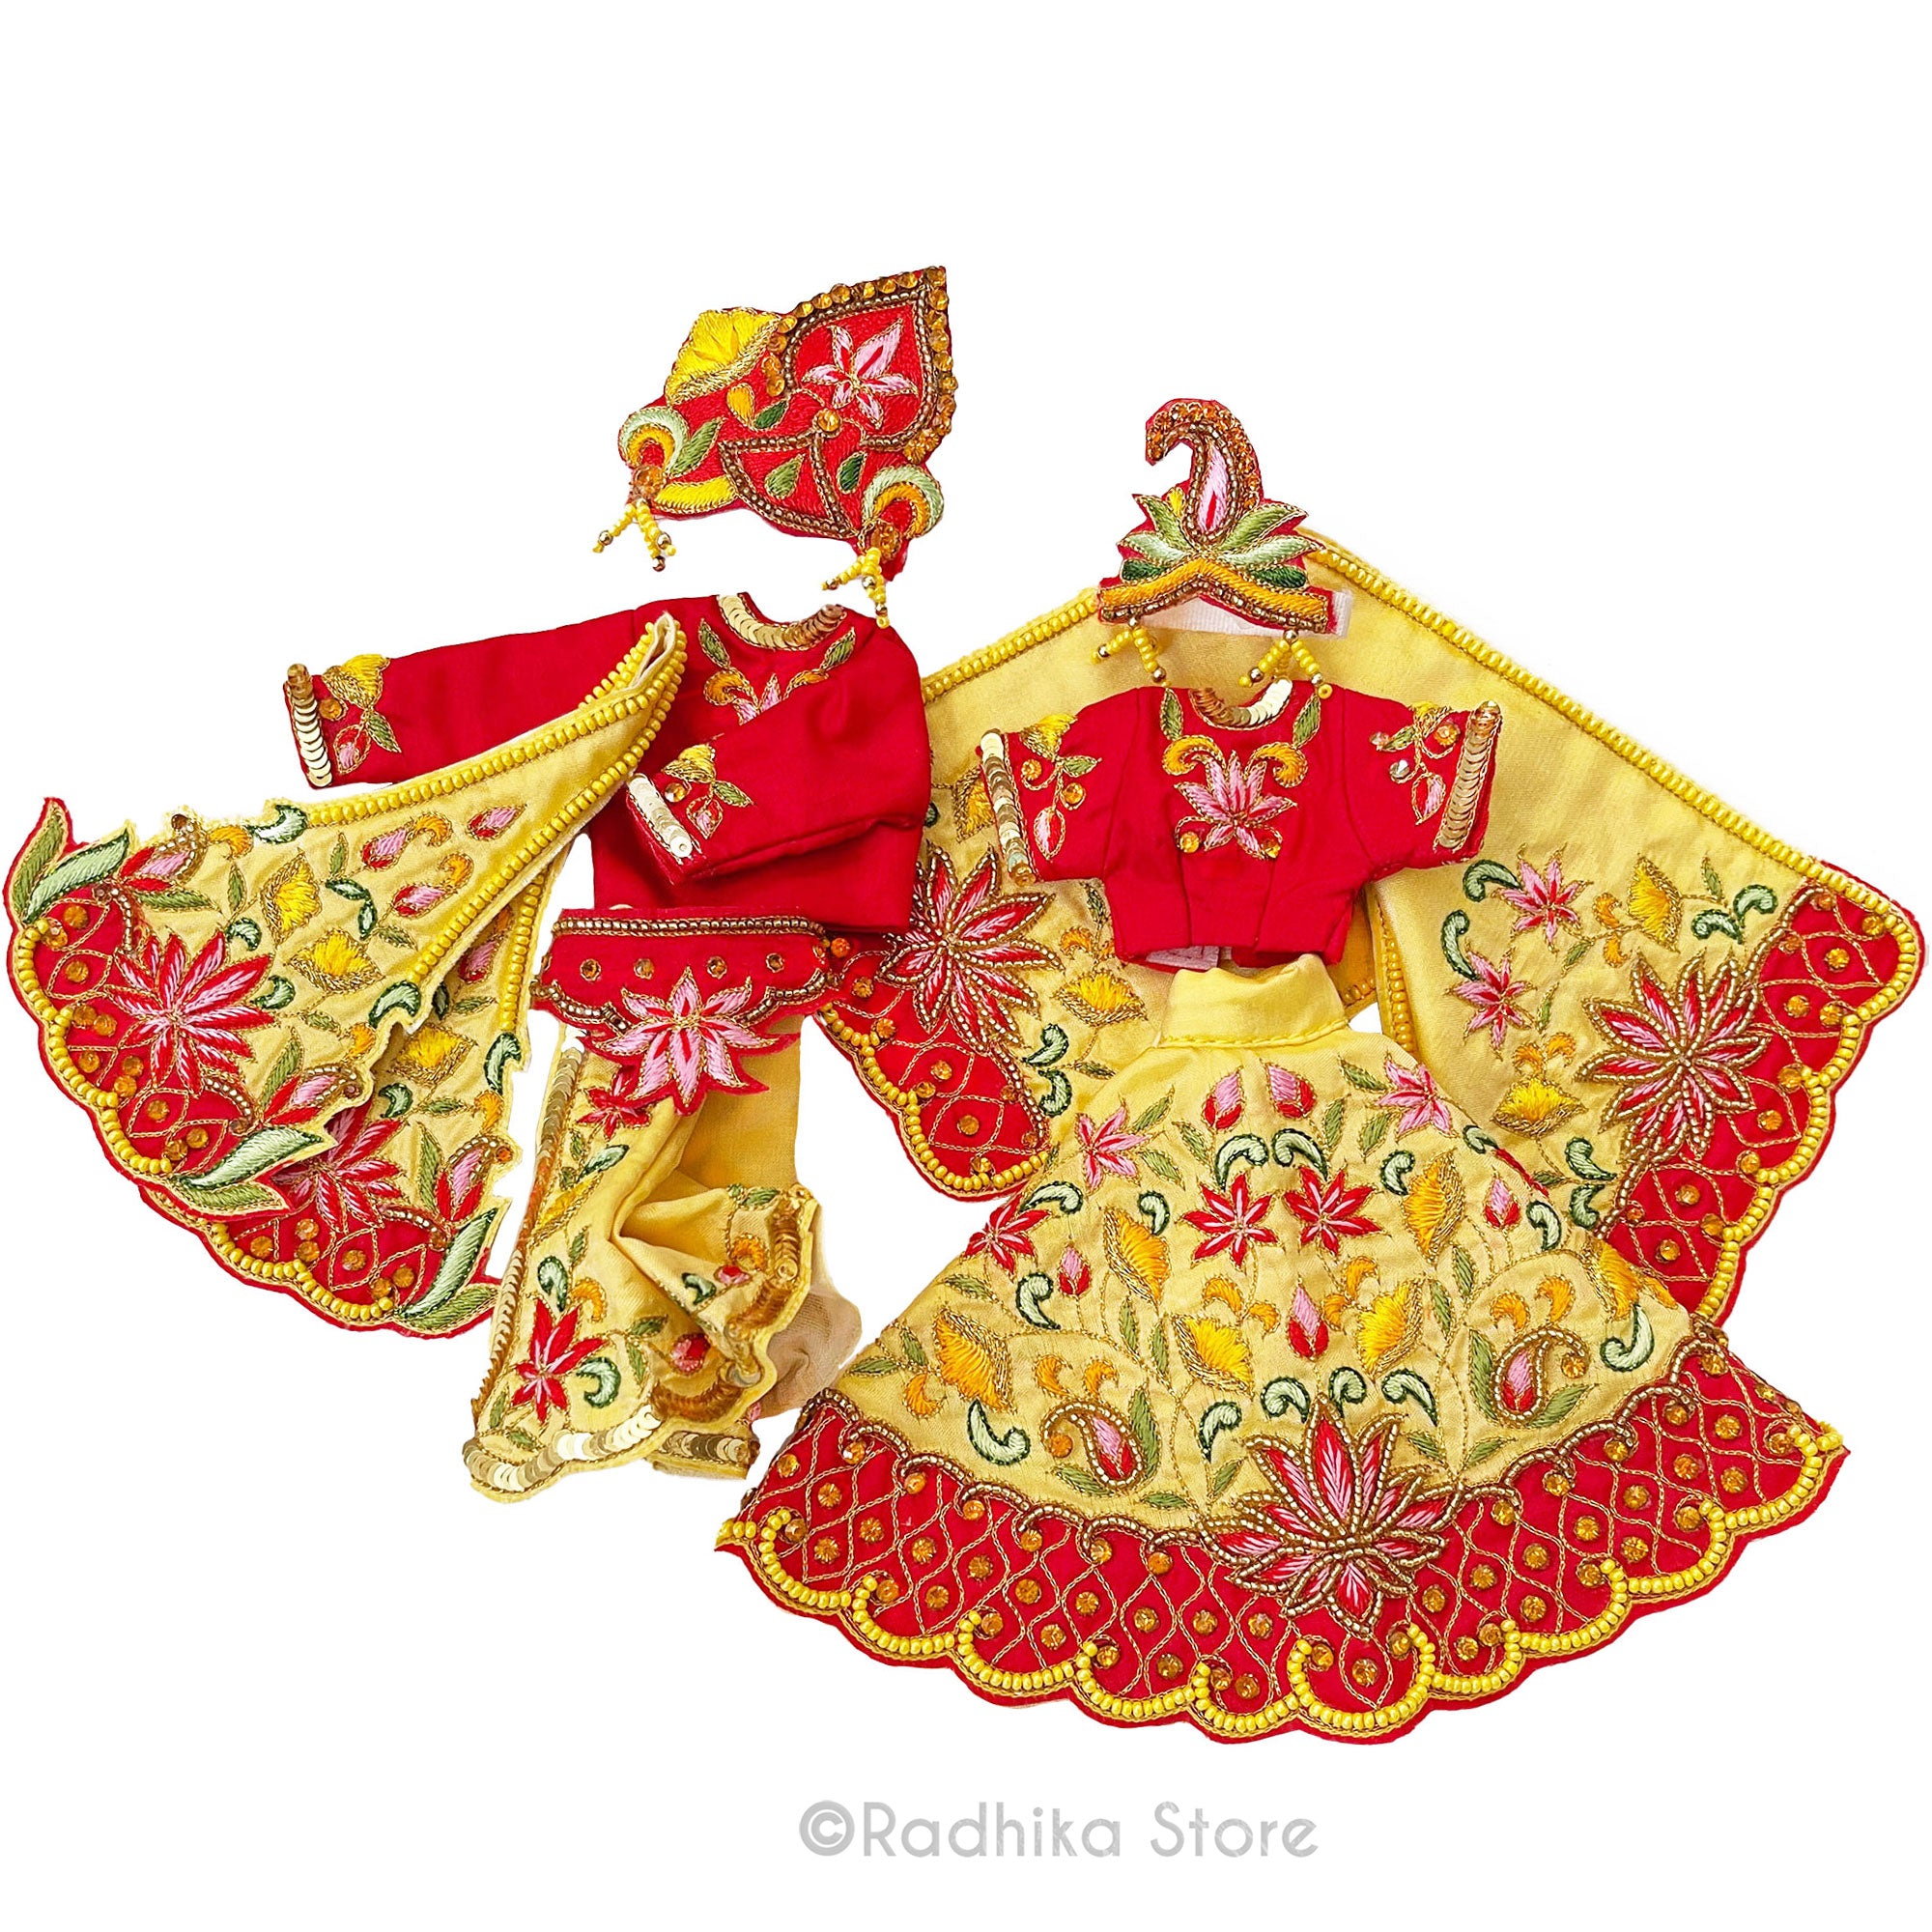 Festival Mayapur Lotus Fountain - Red and Yellow - Silk - Radha Krishna Deity Outfit